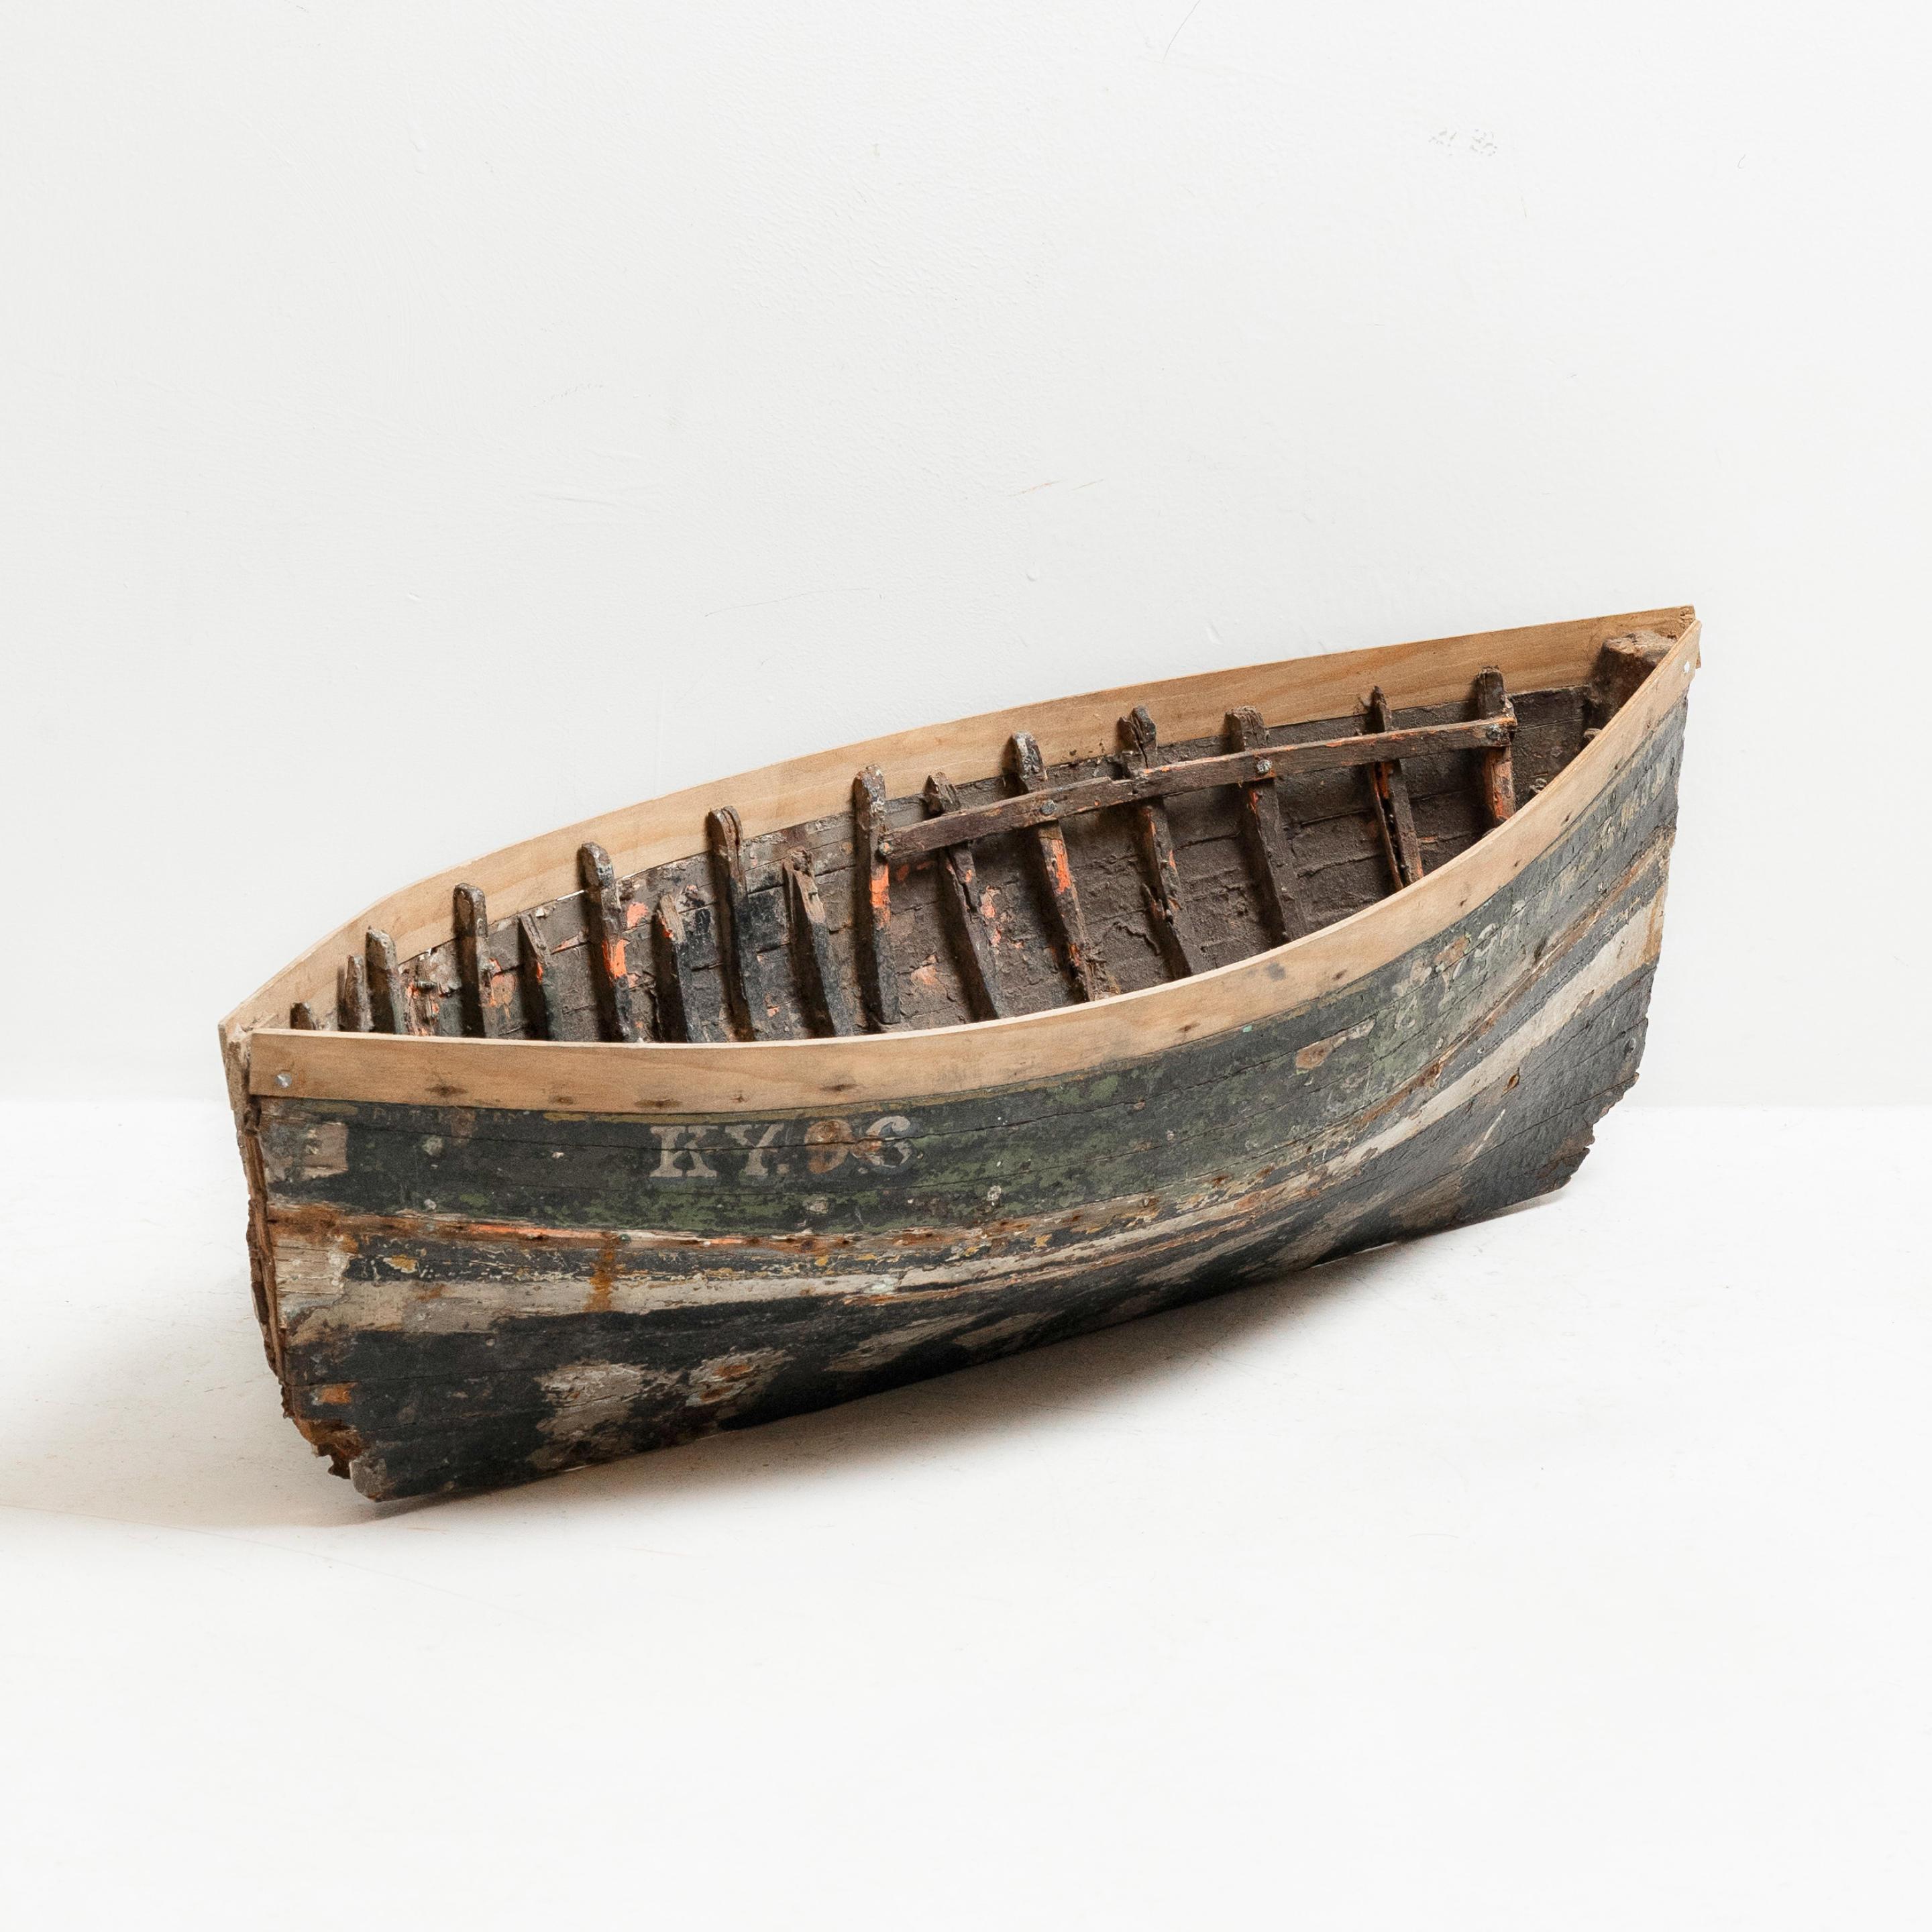 Ref: JC5205

19th century skeleton boat hull

Scotland circa 1840

Measurements: H: 25.5cm (10